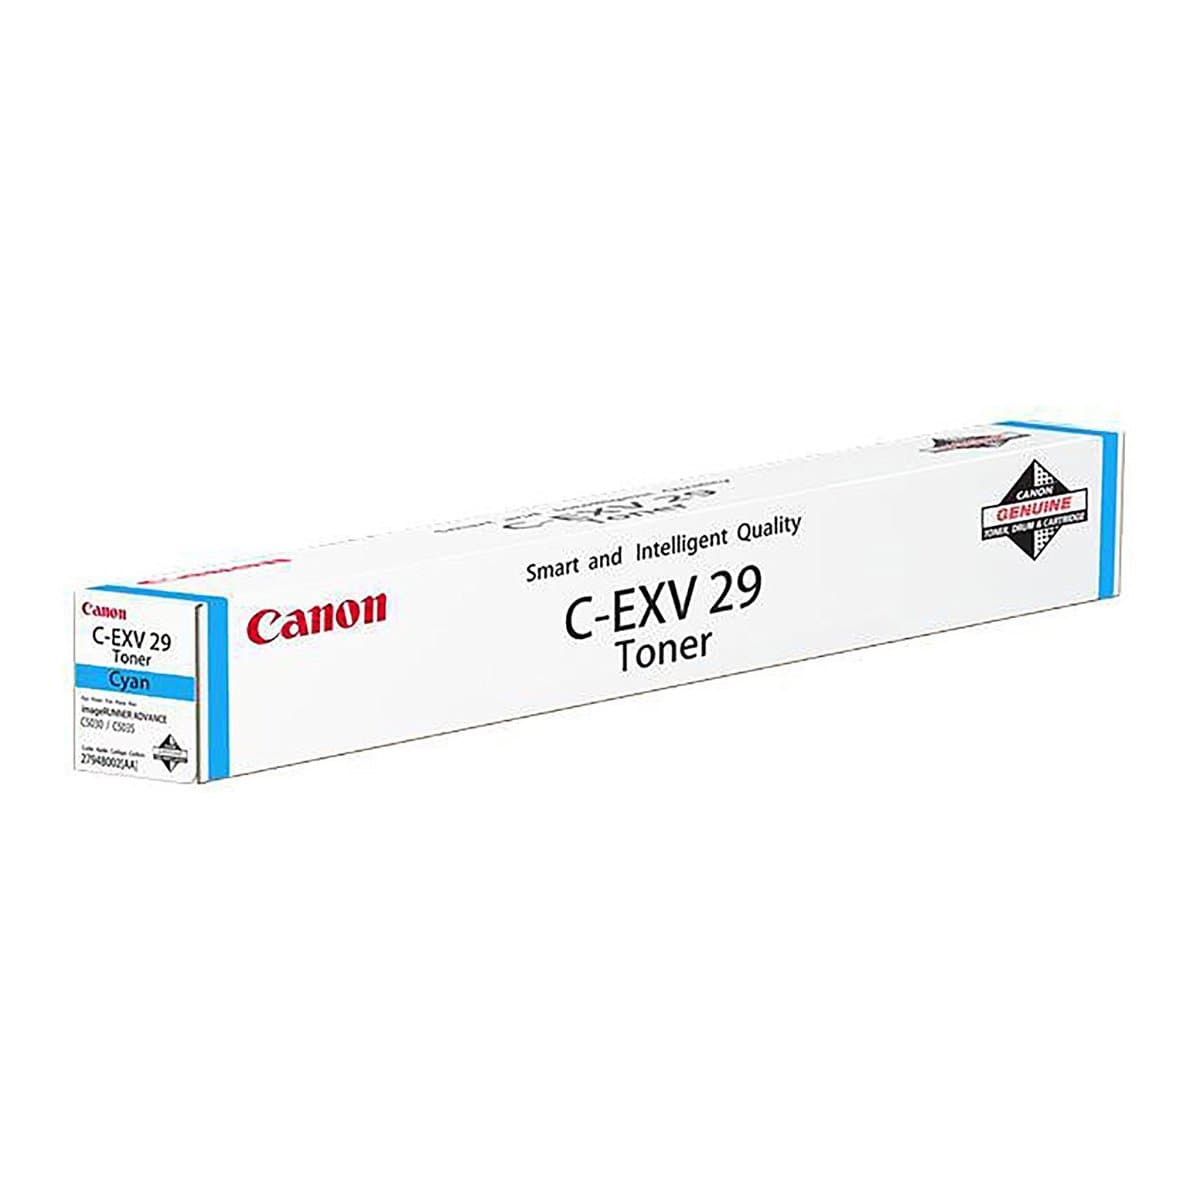 Canon C-EXV 29 Cyan Toner Cartridge - 2794B002